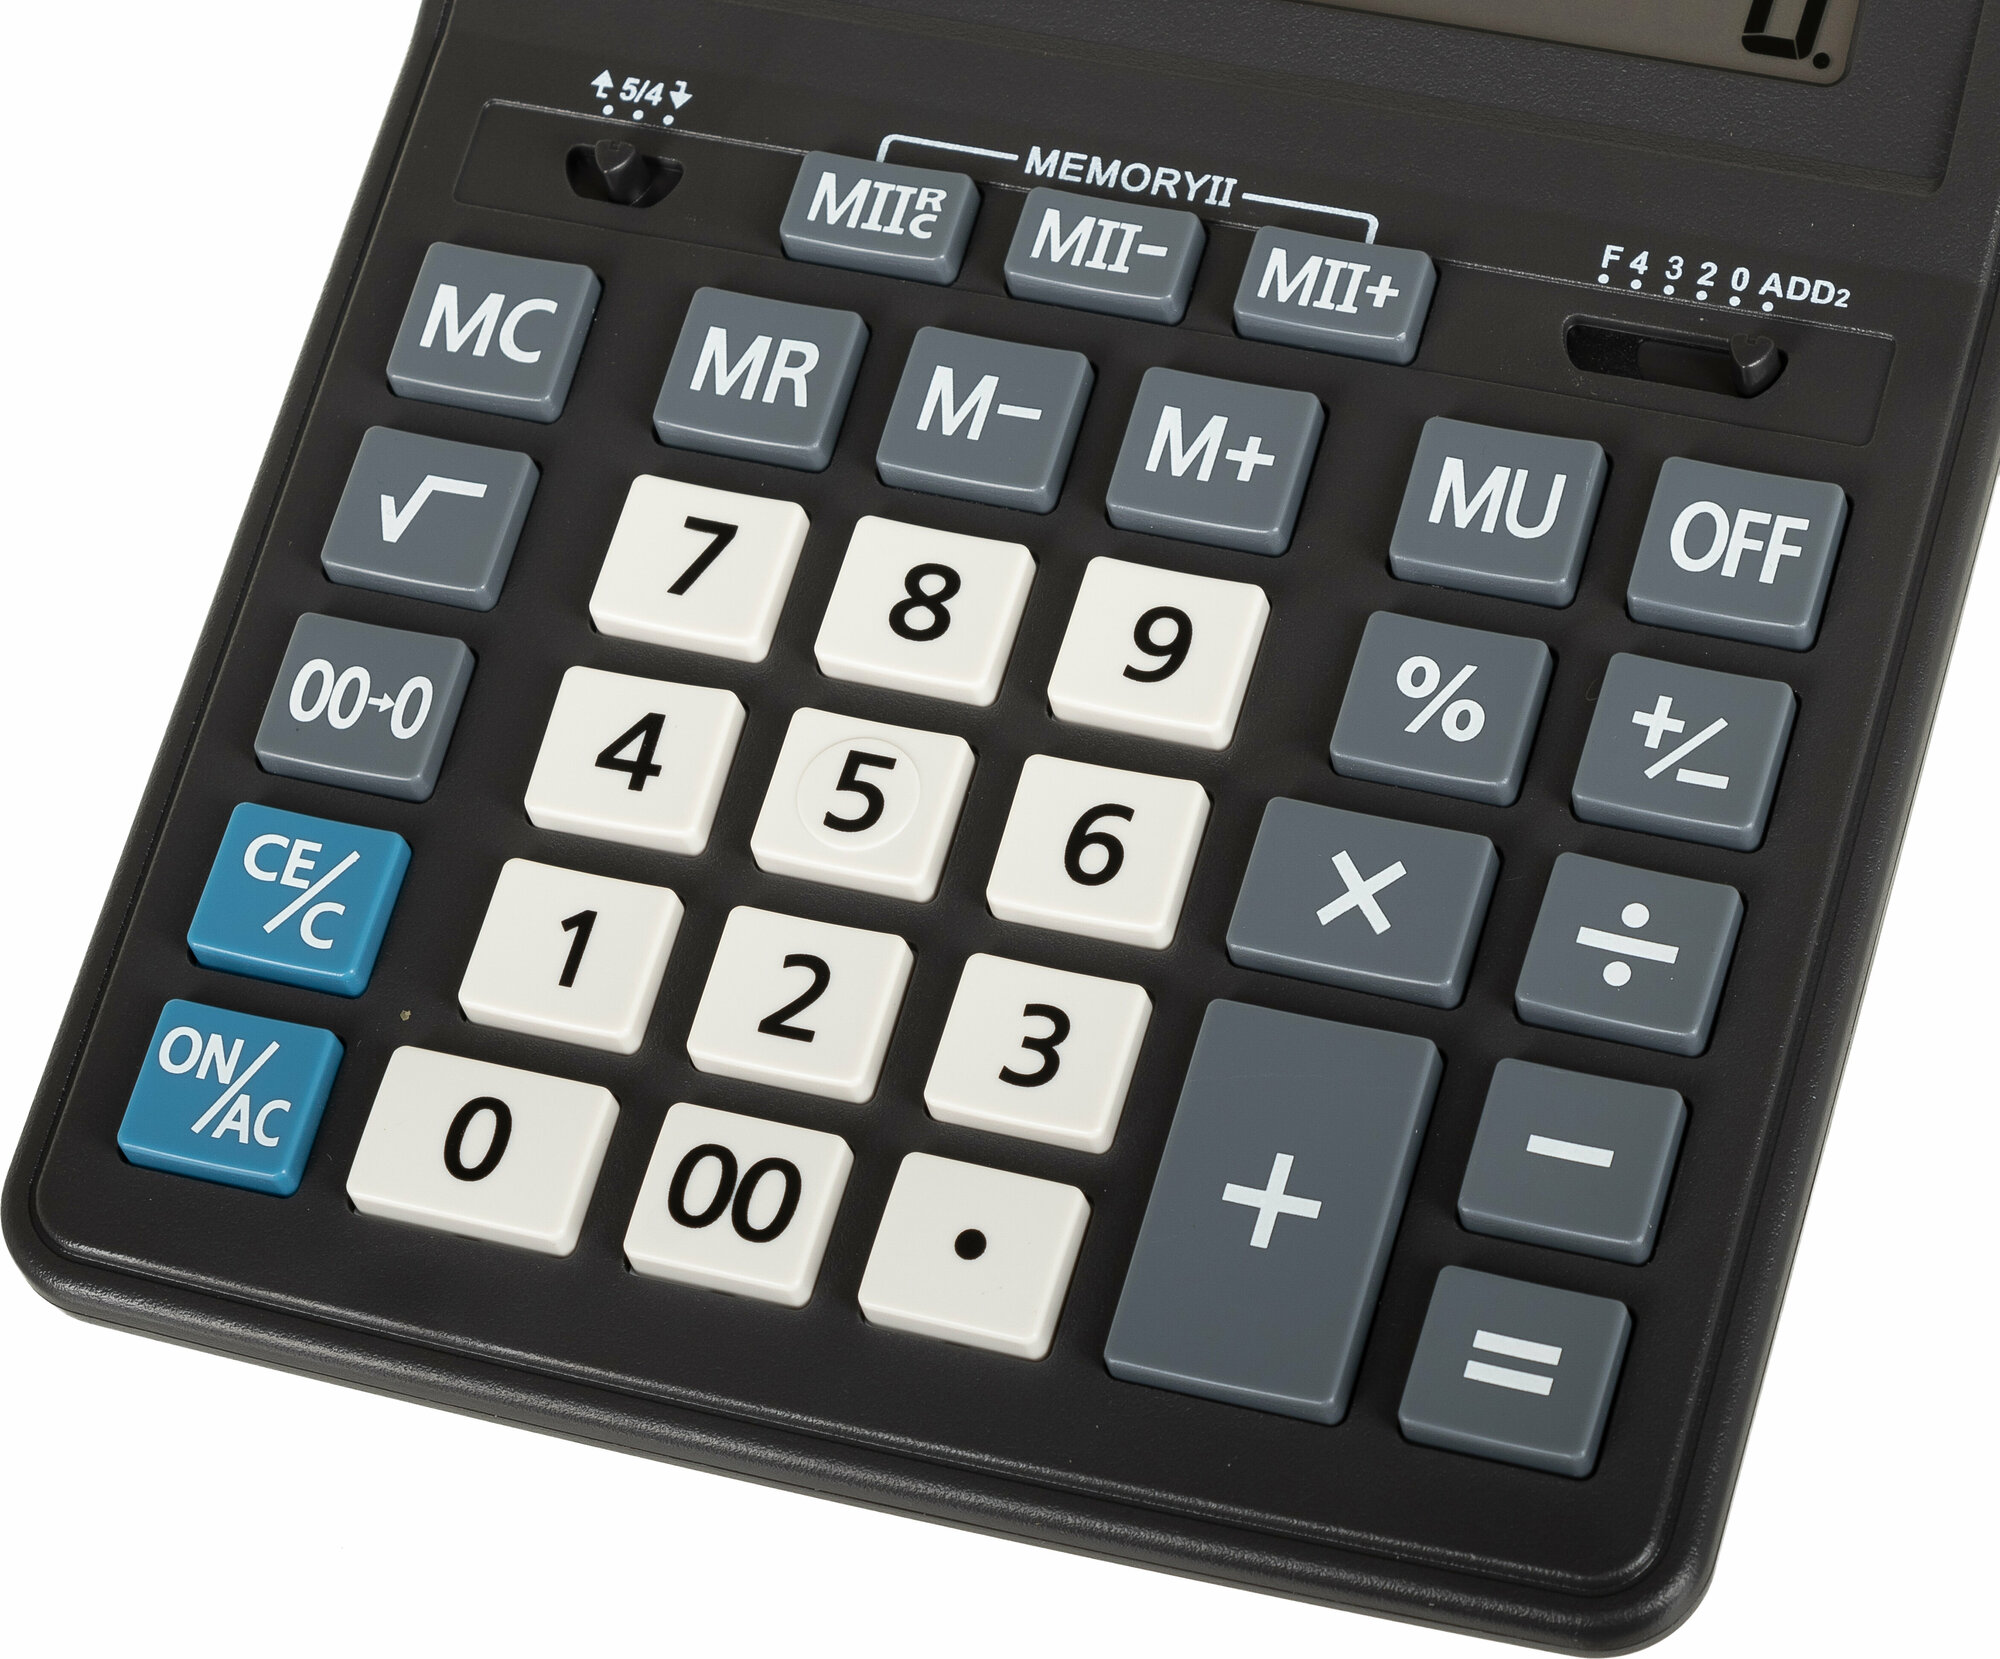 Калькулятор бухгалтерский CITIZEN CDB1201